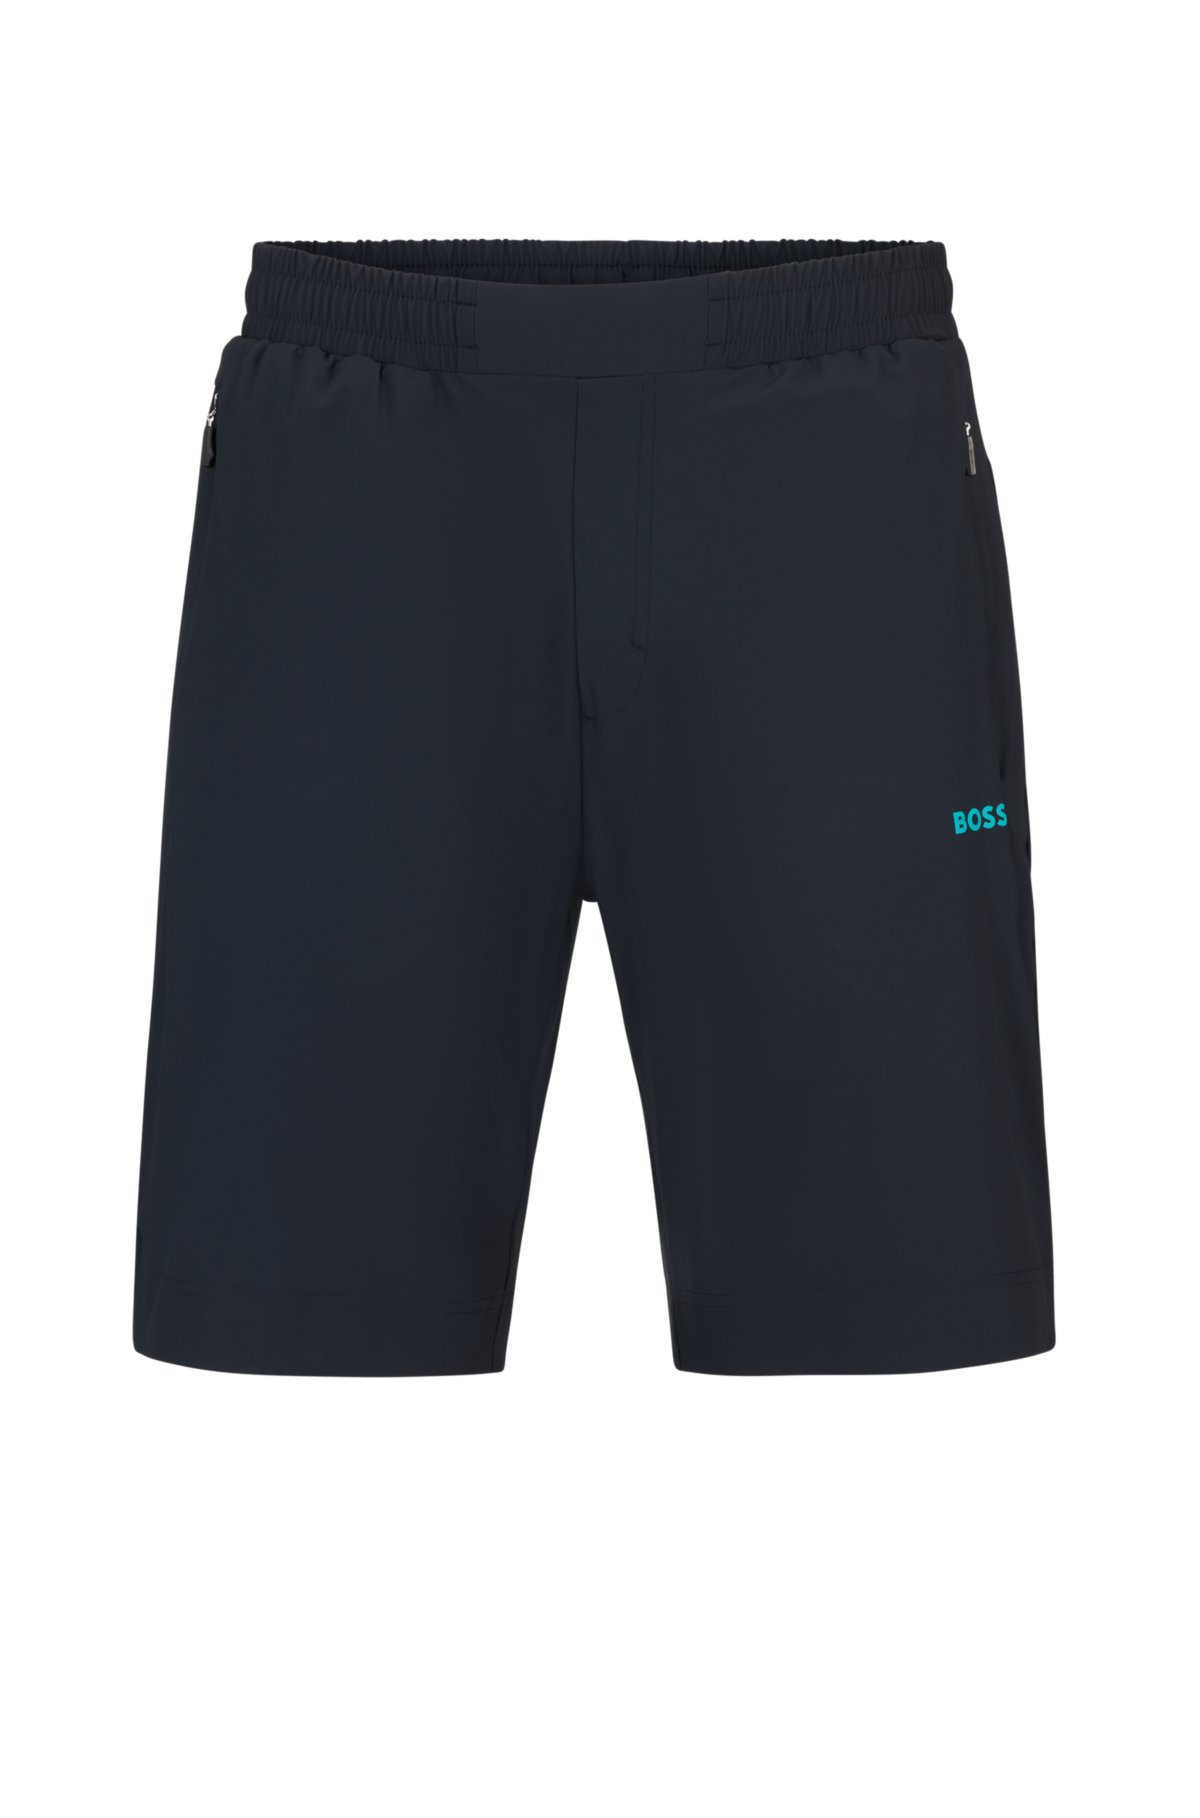 Redbat Men's Black Utility Shorts 